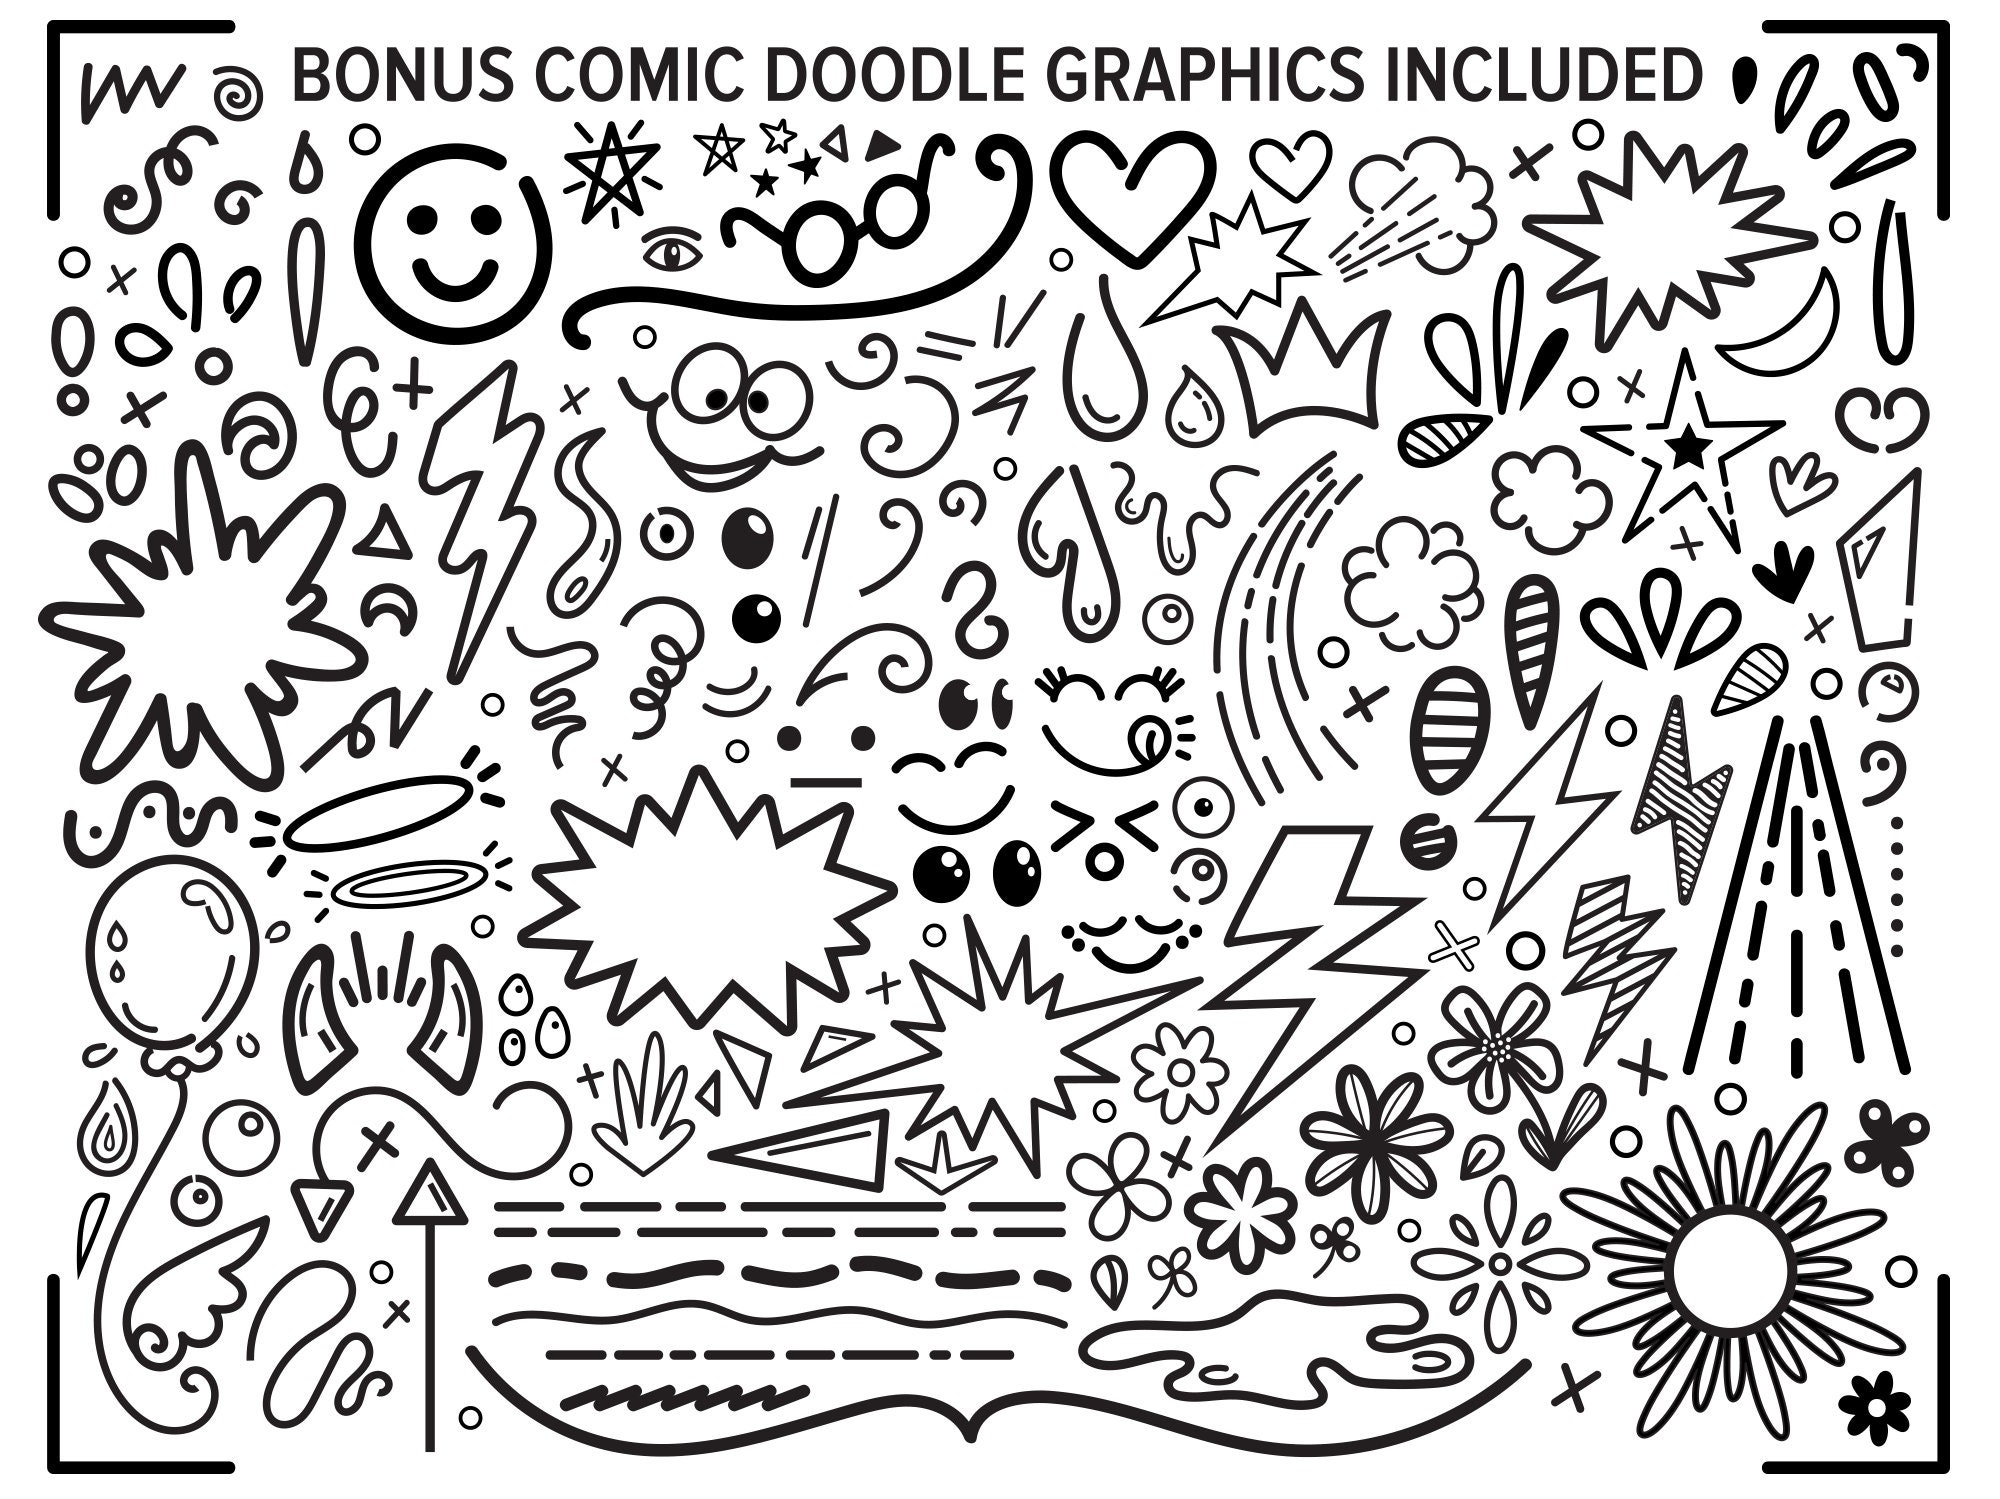 Hey Fox Rounded Font Trio Plus 150 Bonus Cartoon Doodle | Etsy